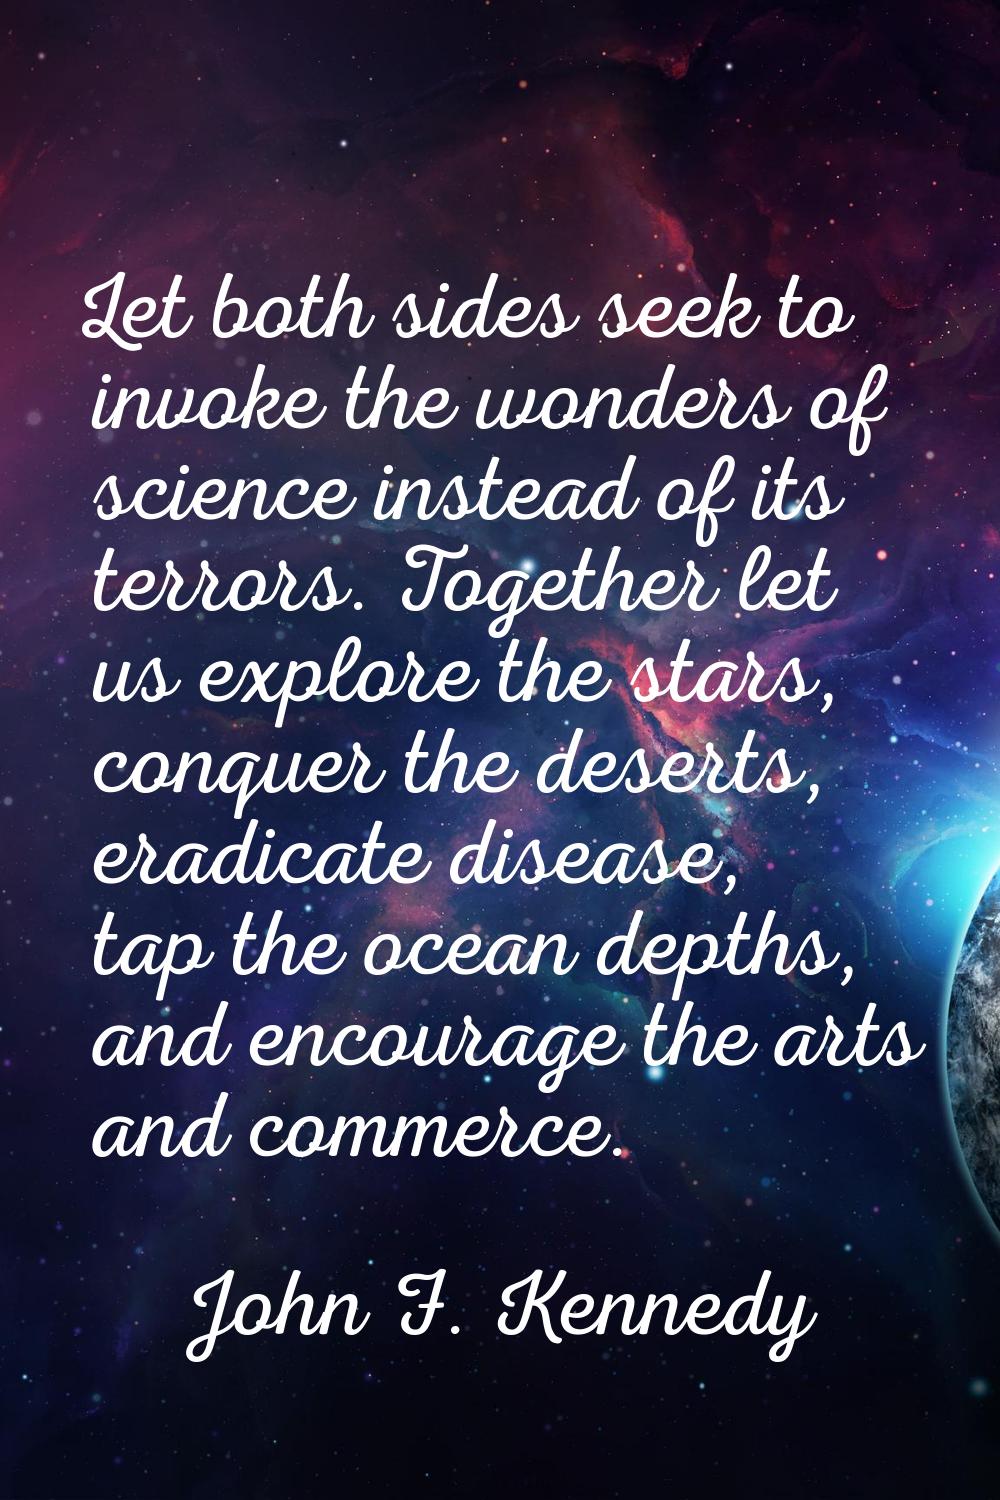 Let both sides seek to invoke the wonders of science instead of its terrors. Together let us explor